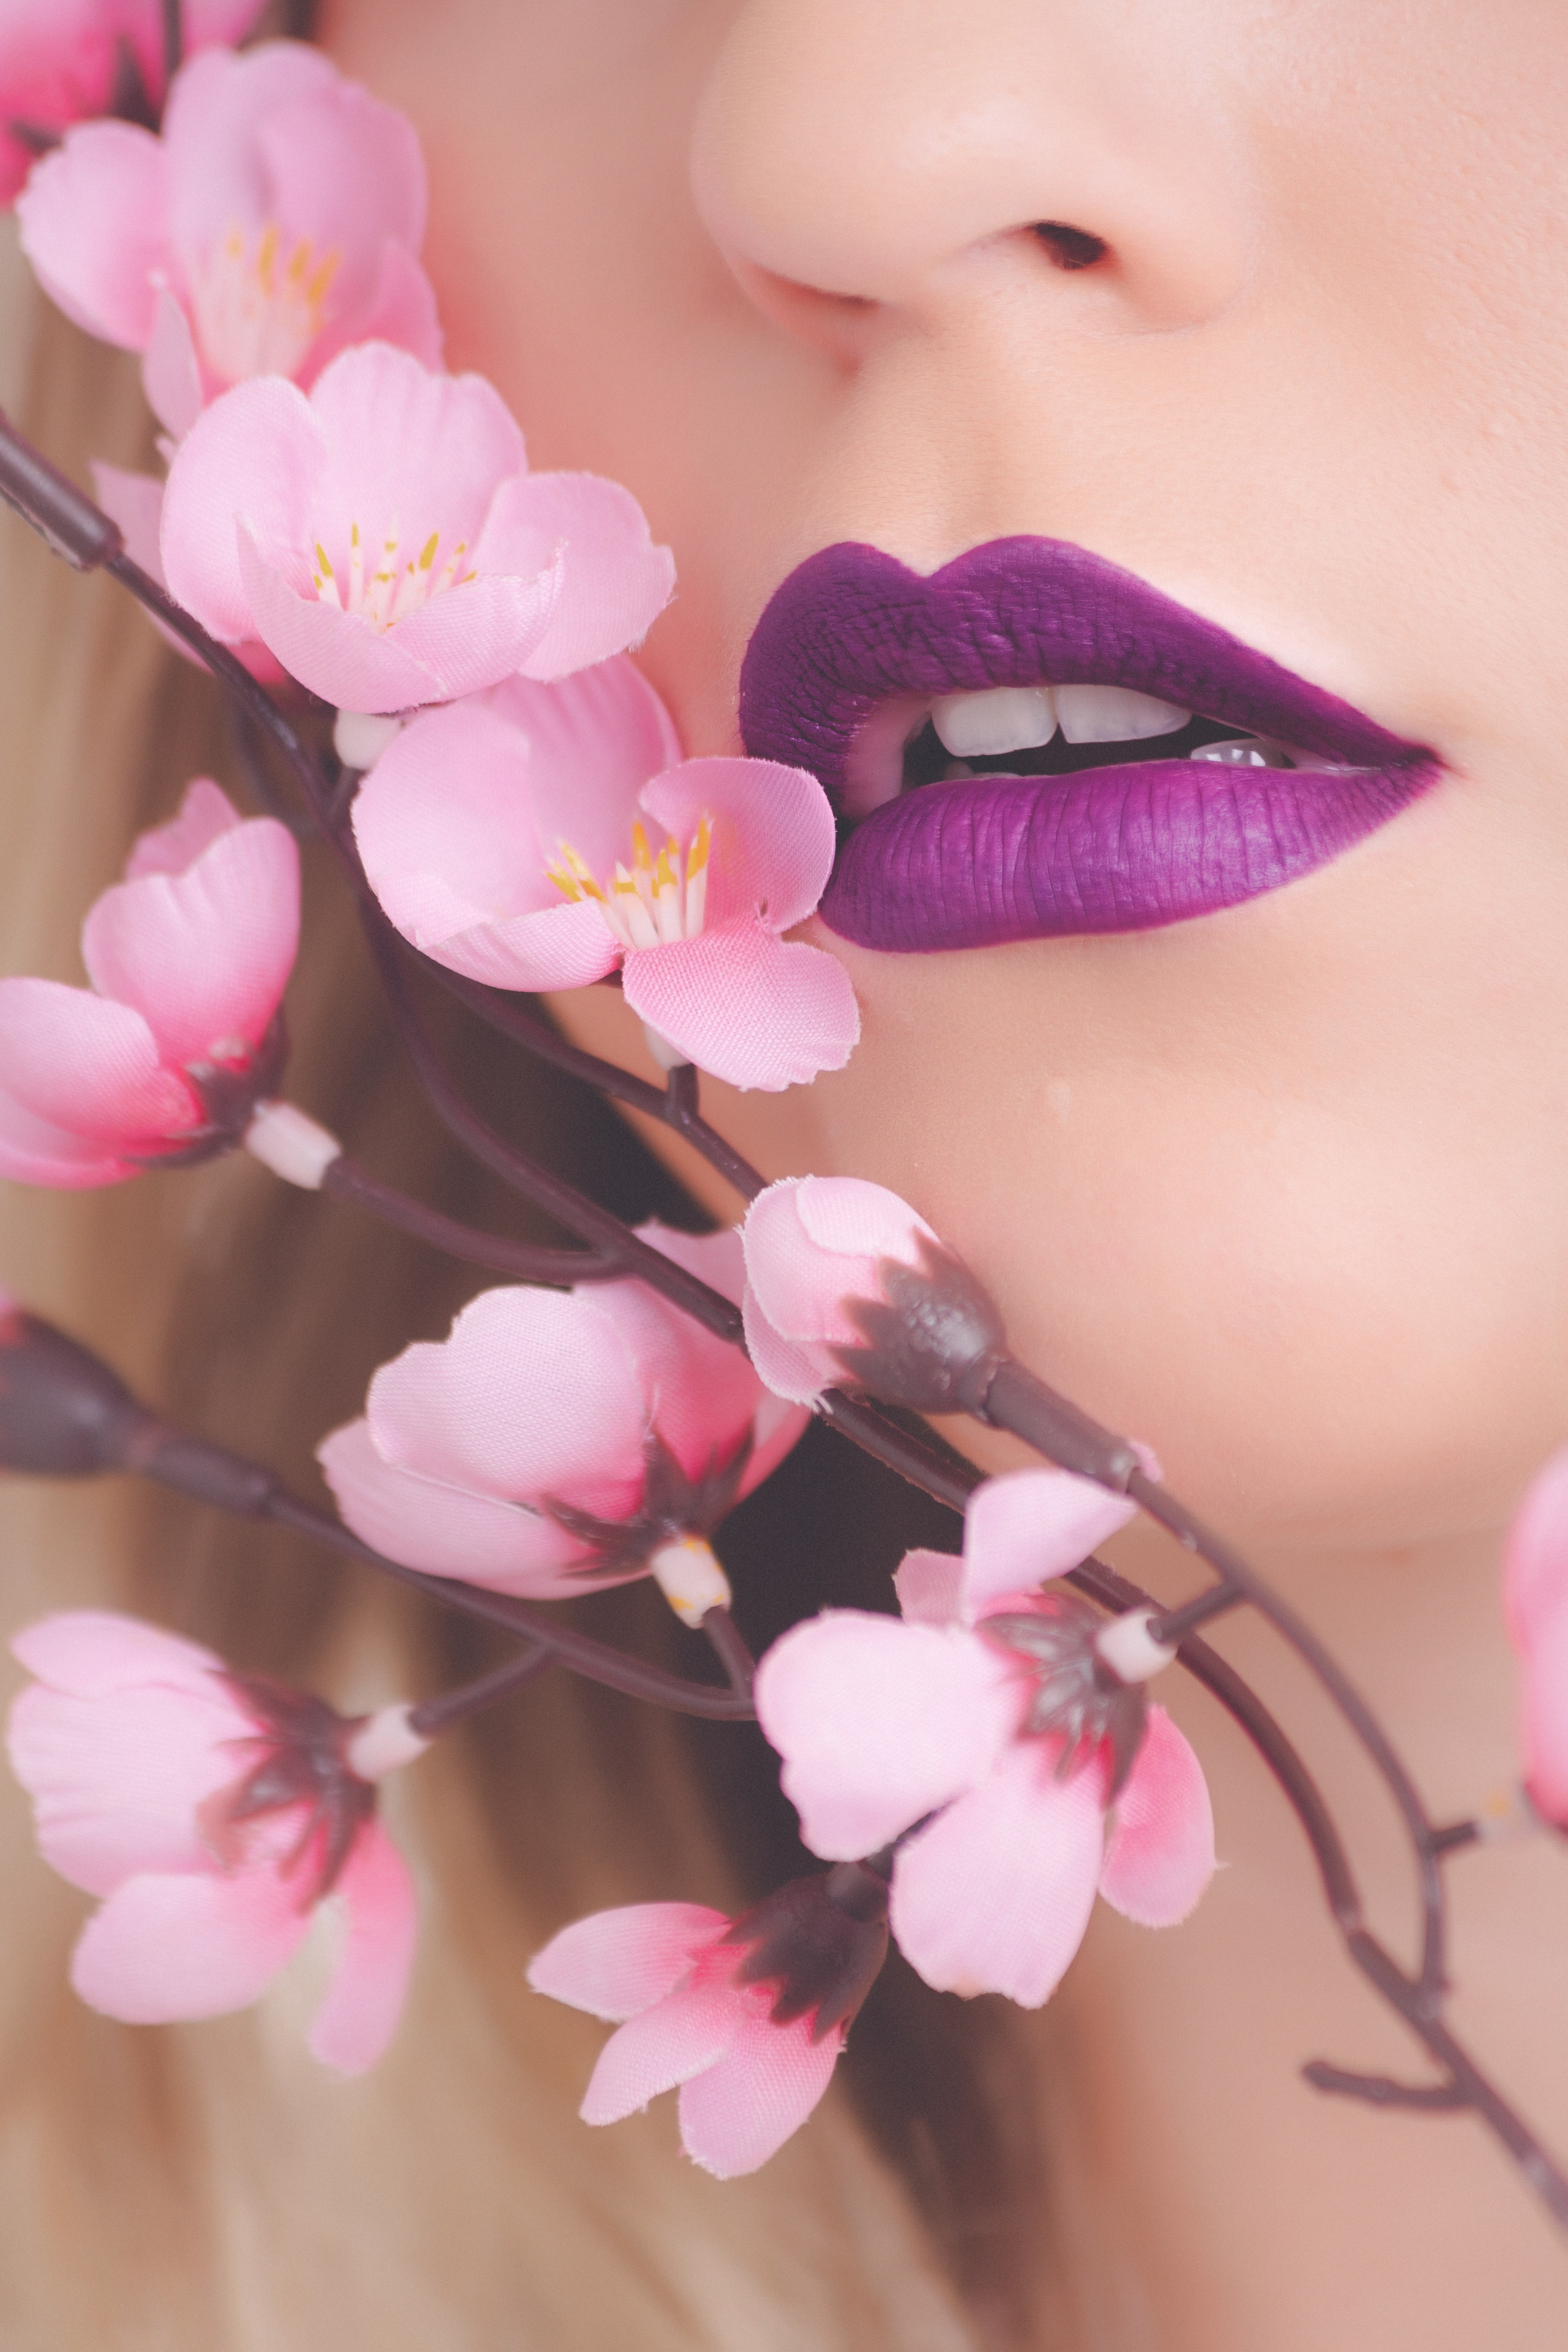 Woman showing her purple lipstick photo